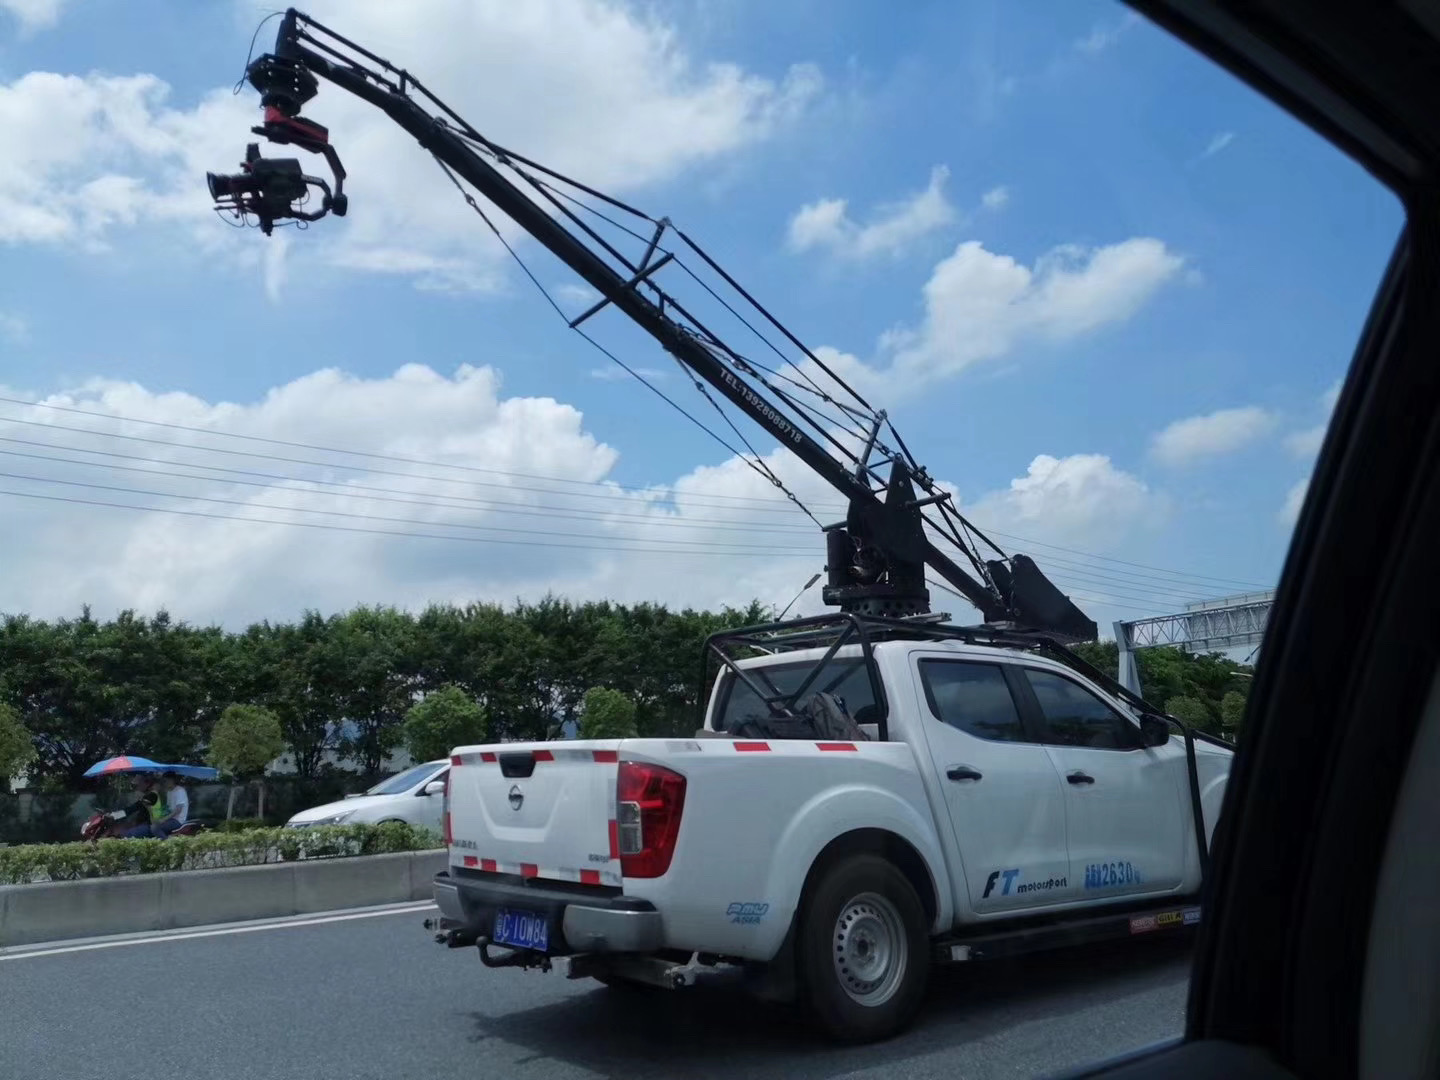 6m camera jib crane for car